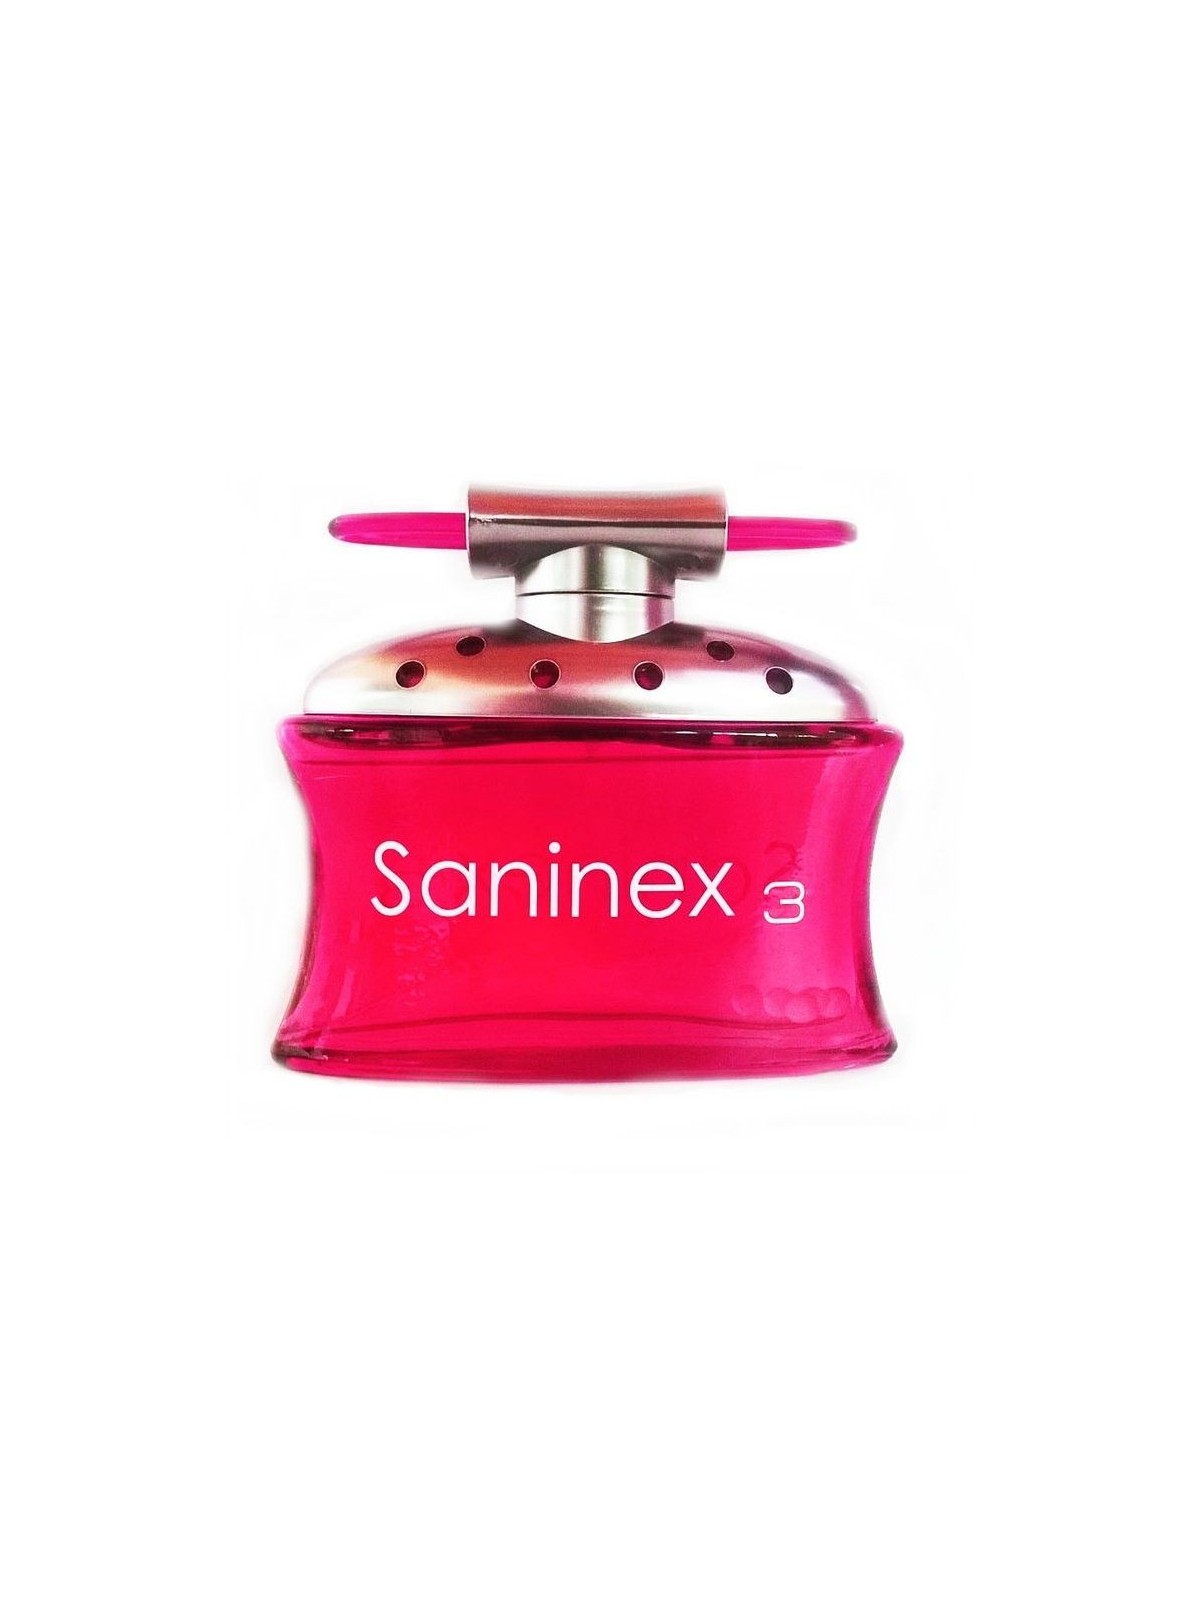 Saninex 3 Perfume Feromonas Unisex - Comprar Perfume feromona Saninex - Perfumes con feromonas (1)